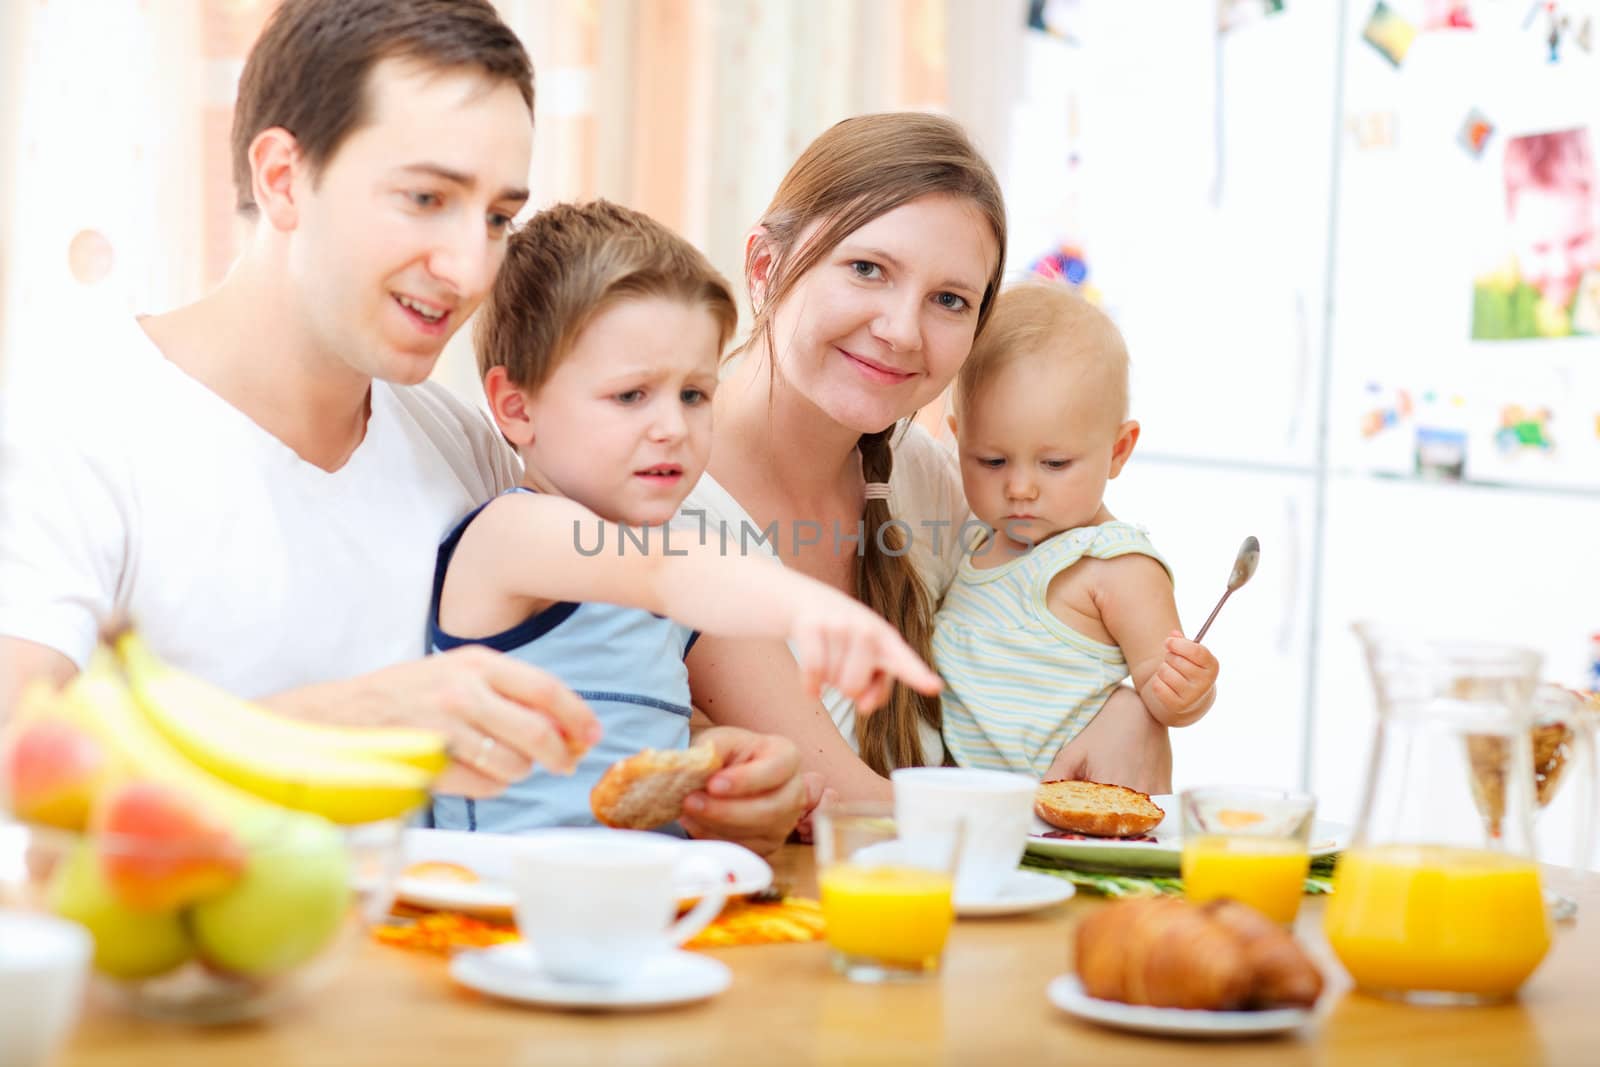 Family breakfast by shalamov